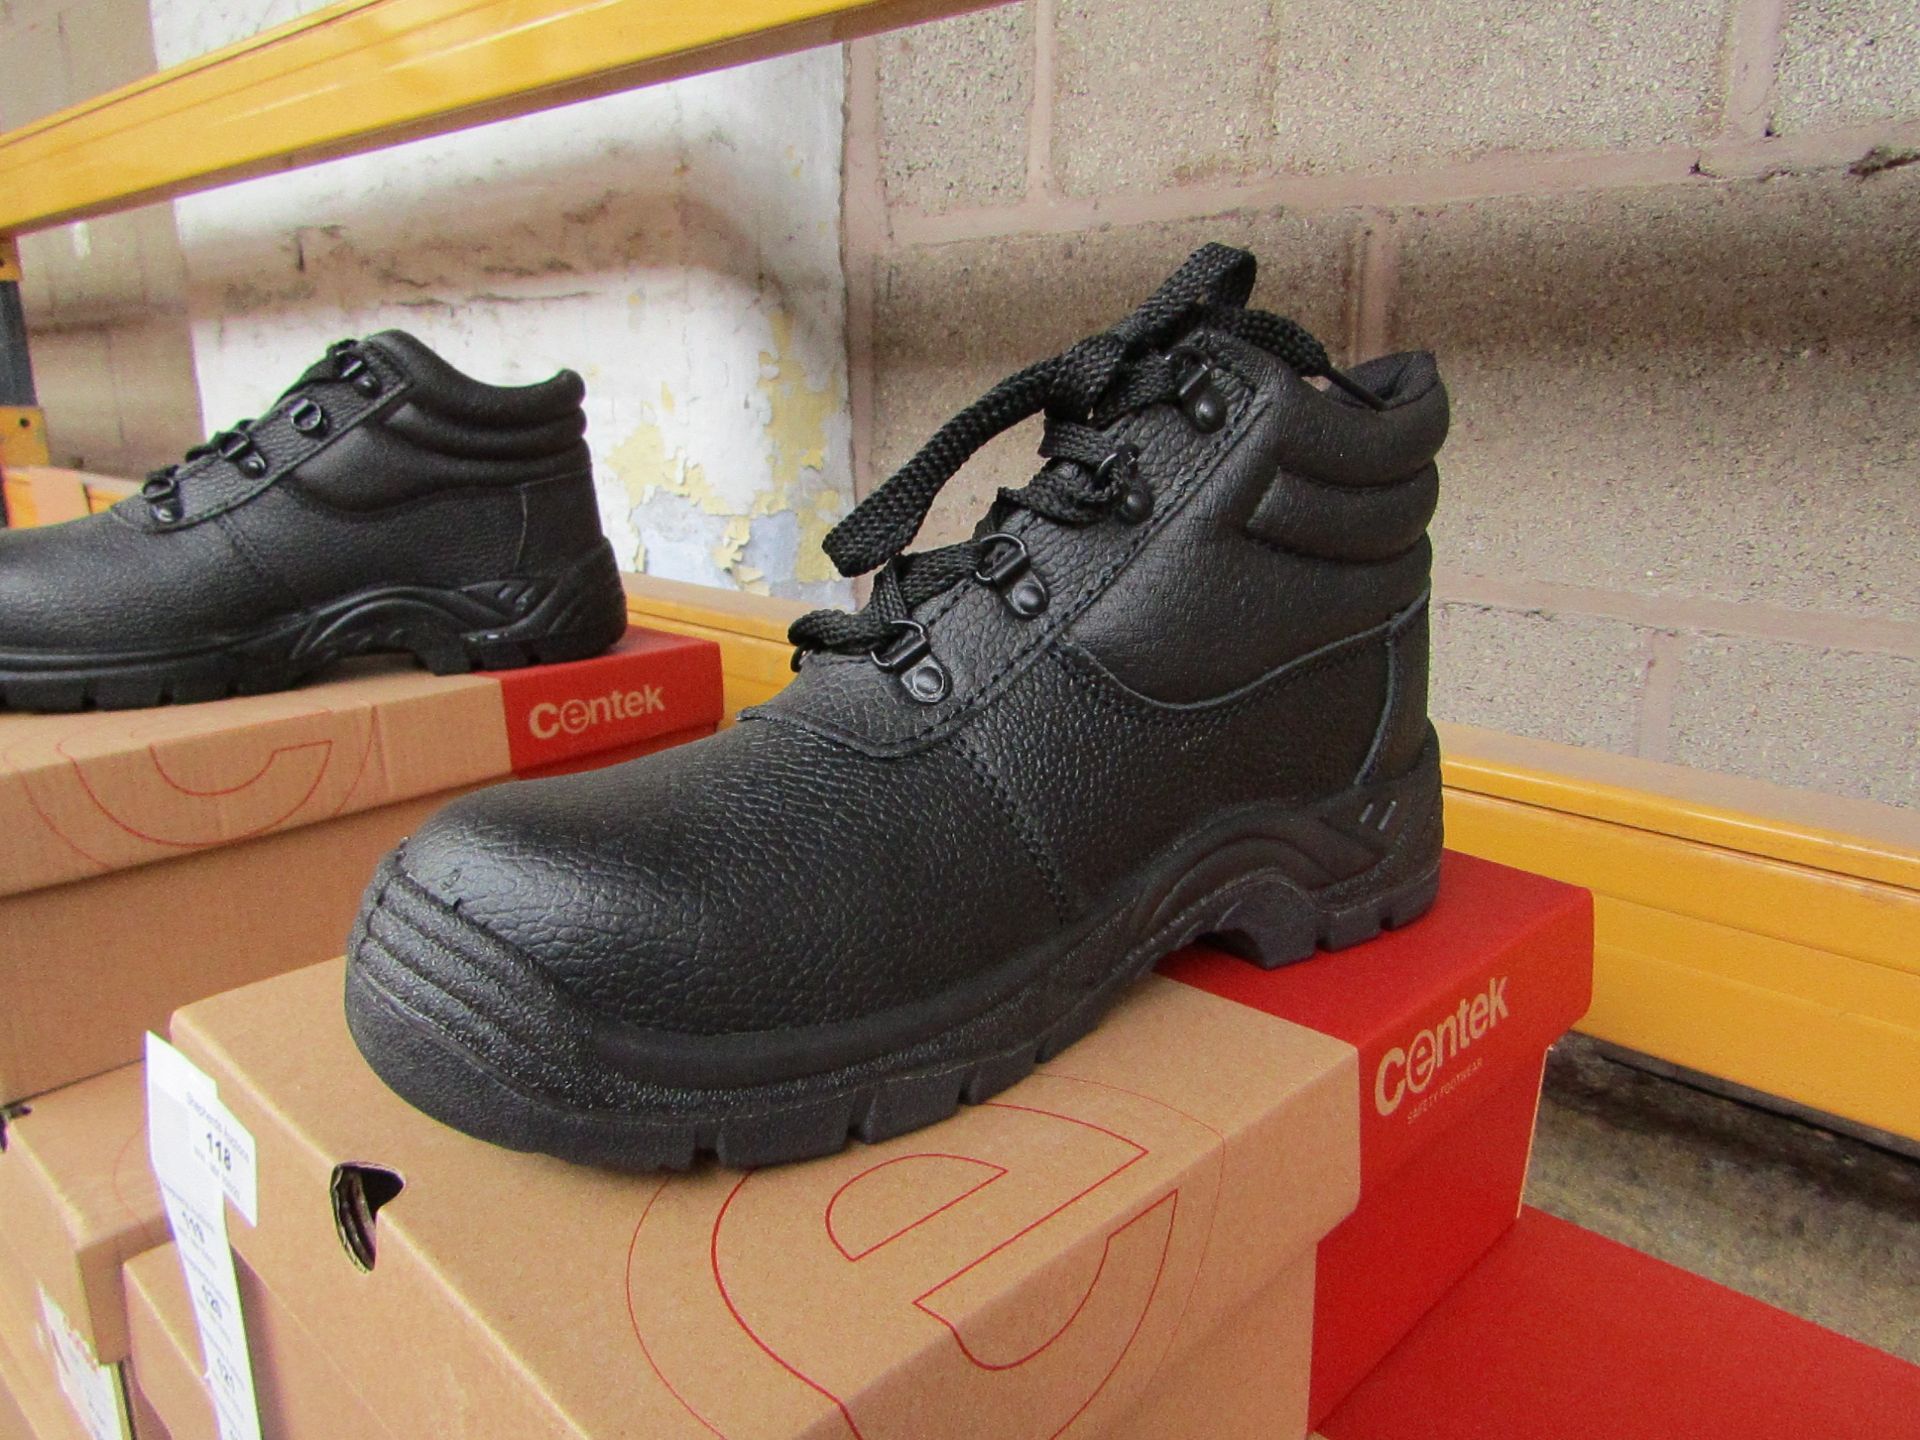 Centek Black Steel Toe Cap Boot size 9 New & Boxed.